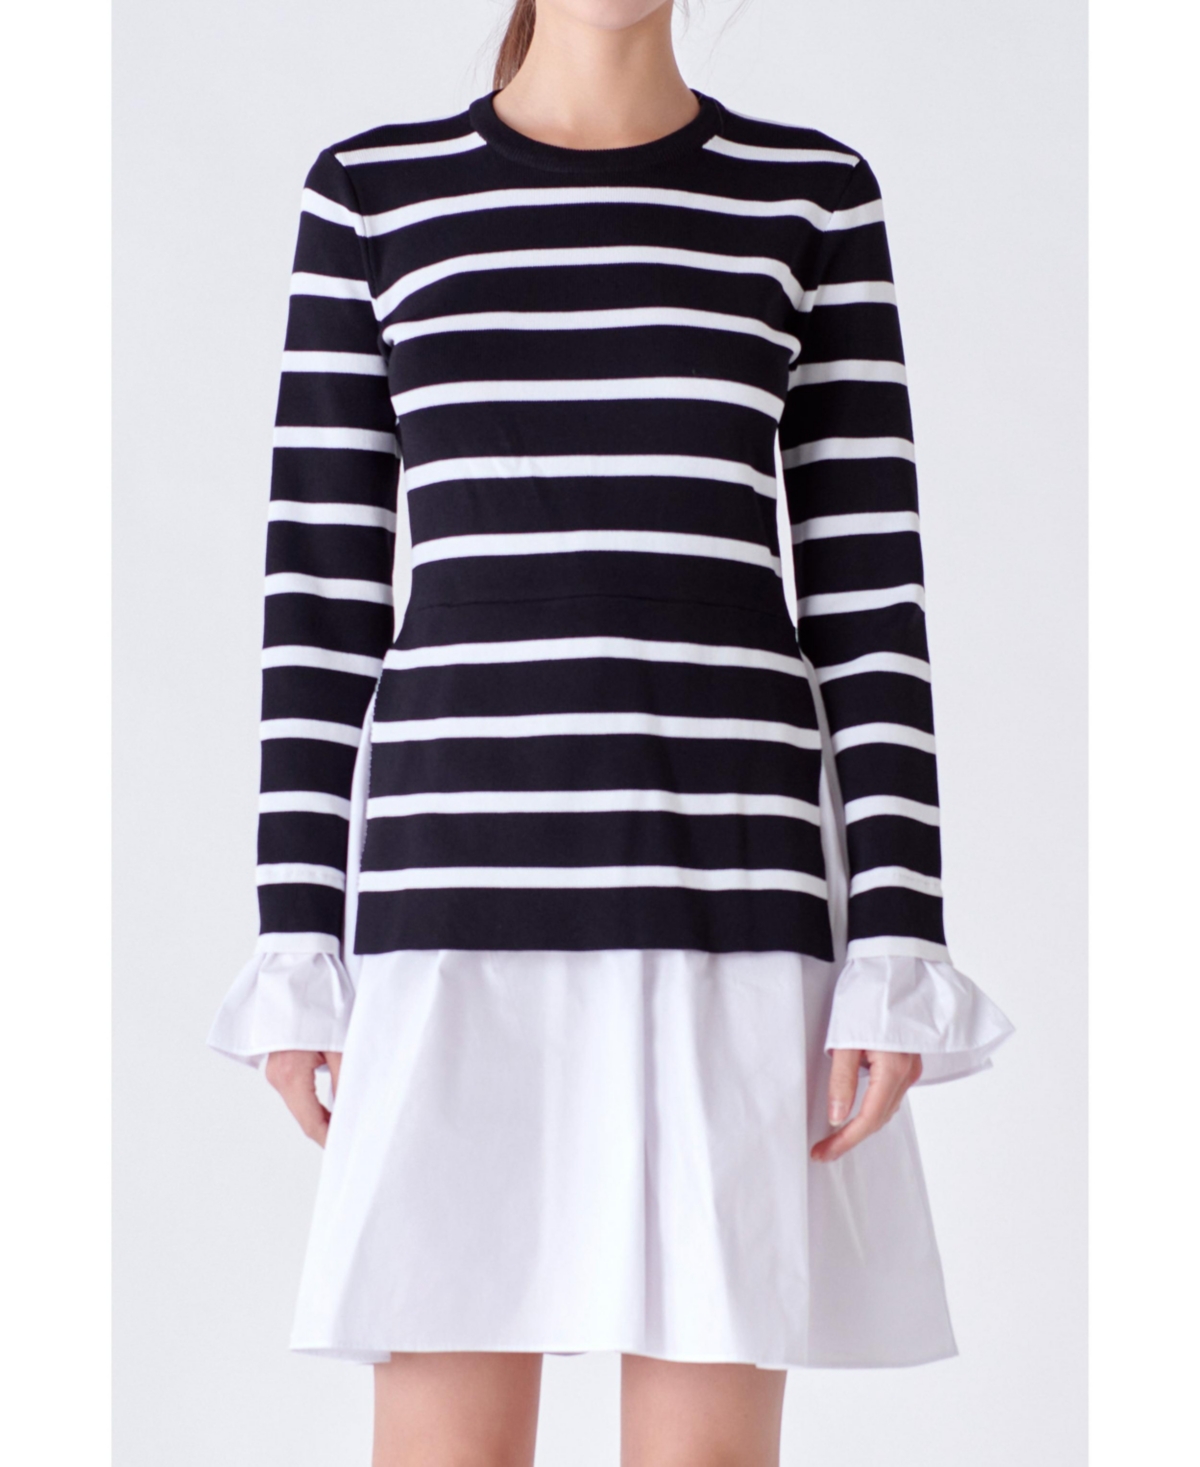 1920s Day Dresses, Non-Flapper Daytime Outfits Womens Poplin Combo Knit Dress - Black stripe $90.00 AT vintagedancer.com